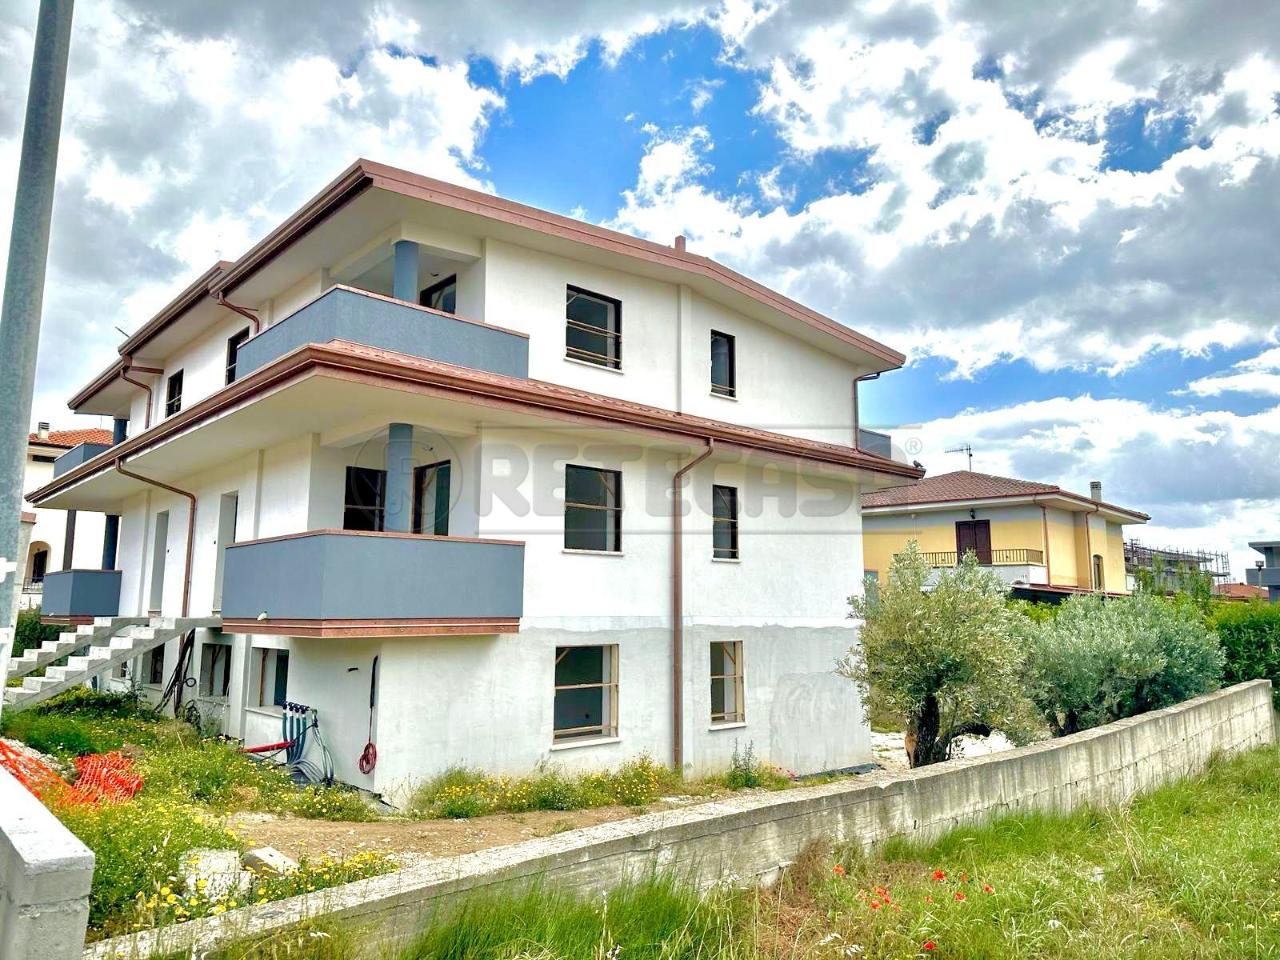 Villa a schiera in vendita a Montepaone